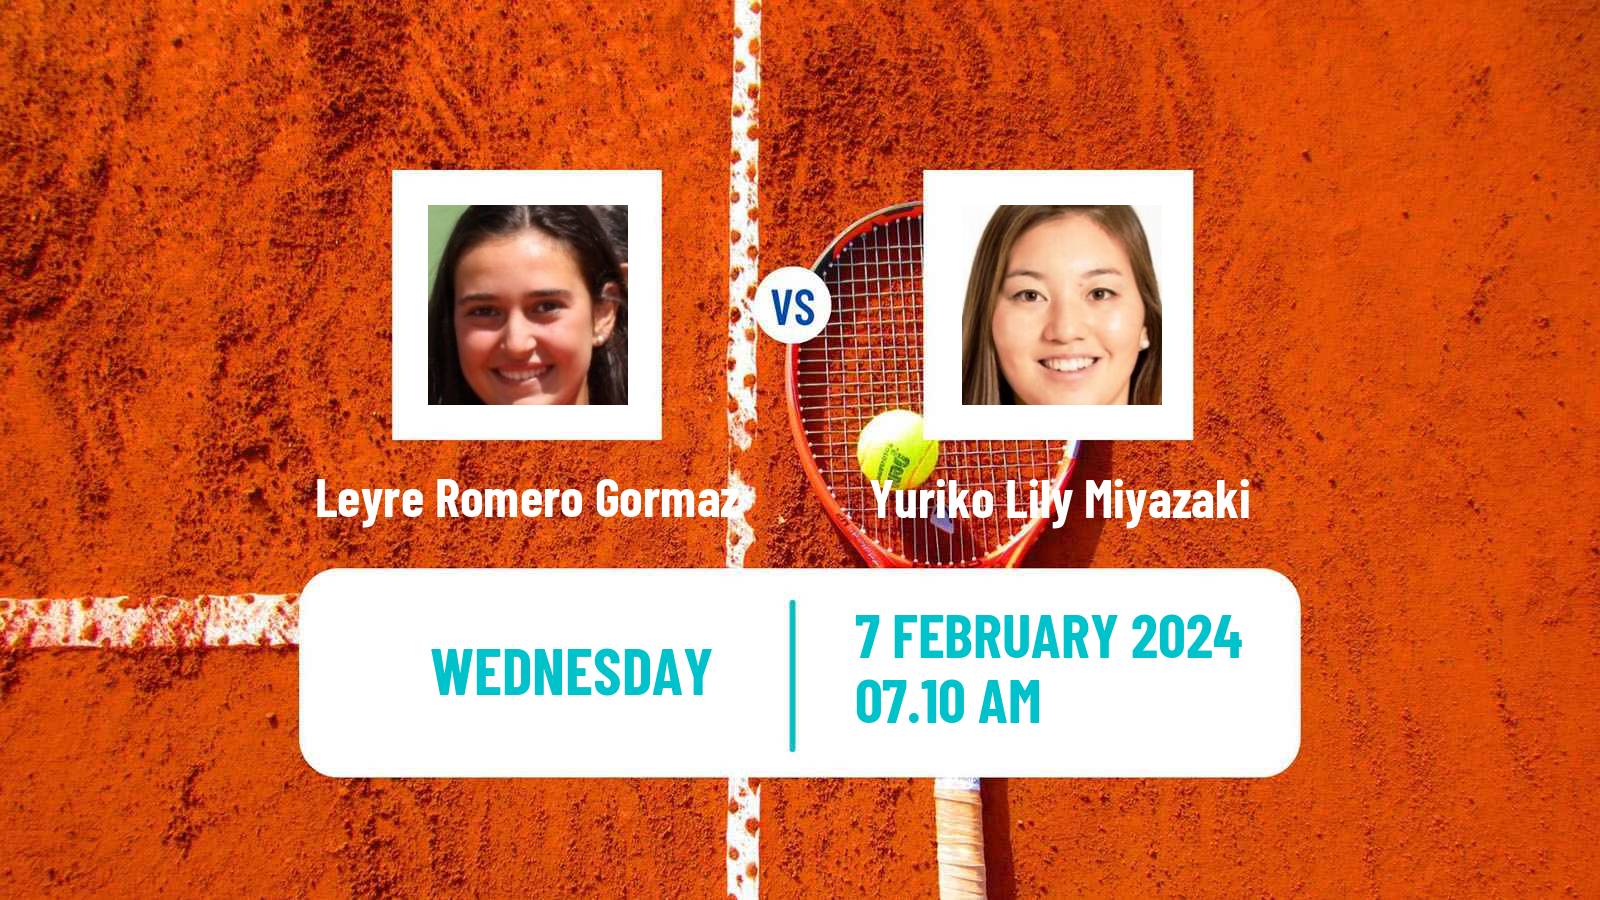 Tennis ITF W50 Edgbaston Women Leyre Romero Gormaz - Yuriko Lily Miyazaki